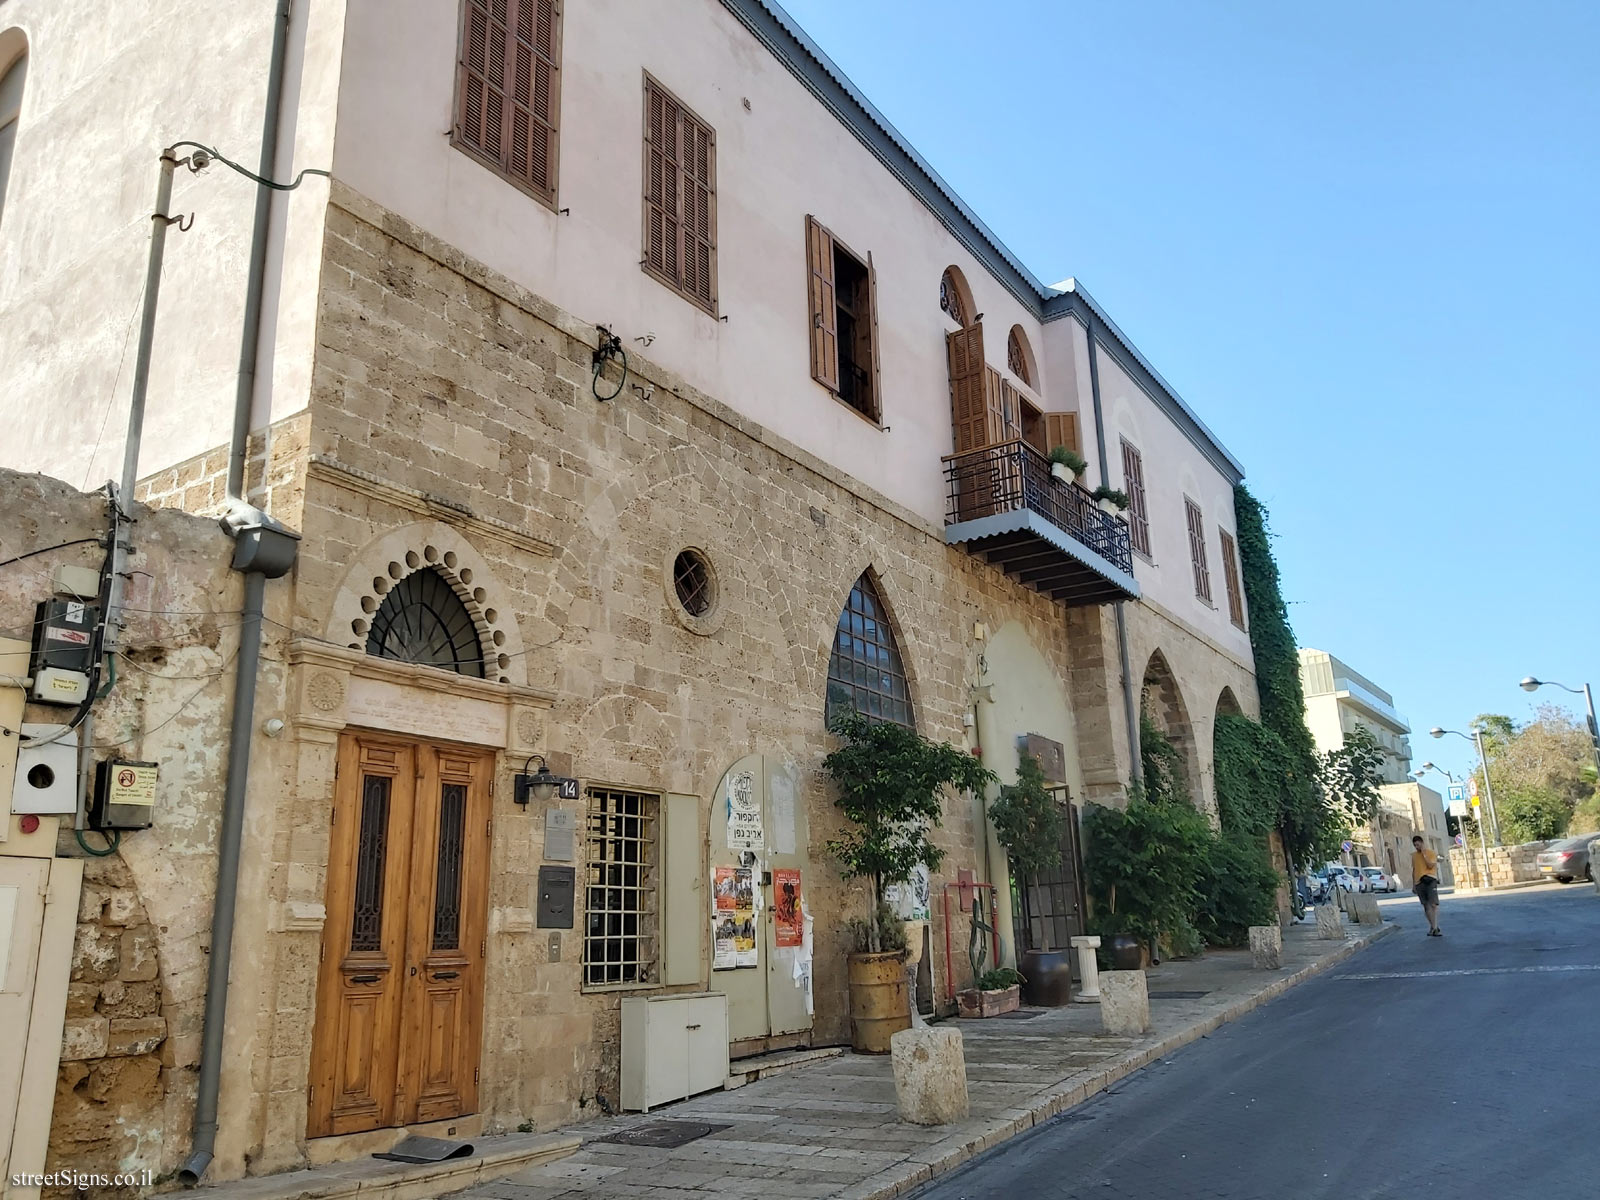 Tel Aviv - buildings for preservation - Kandinov House - 14 Hazorfim